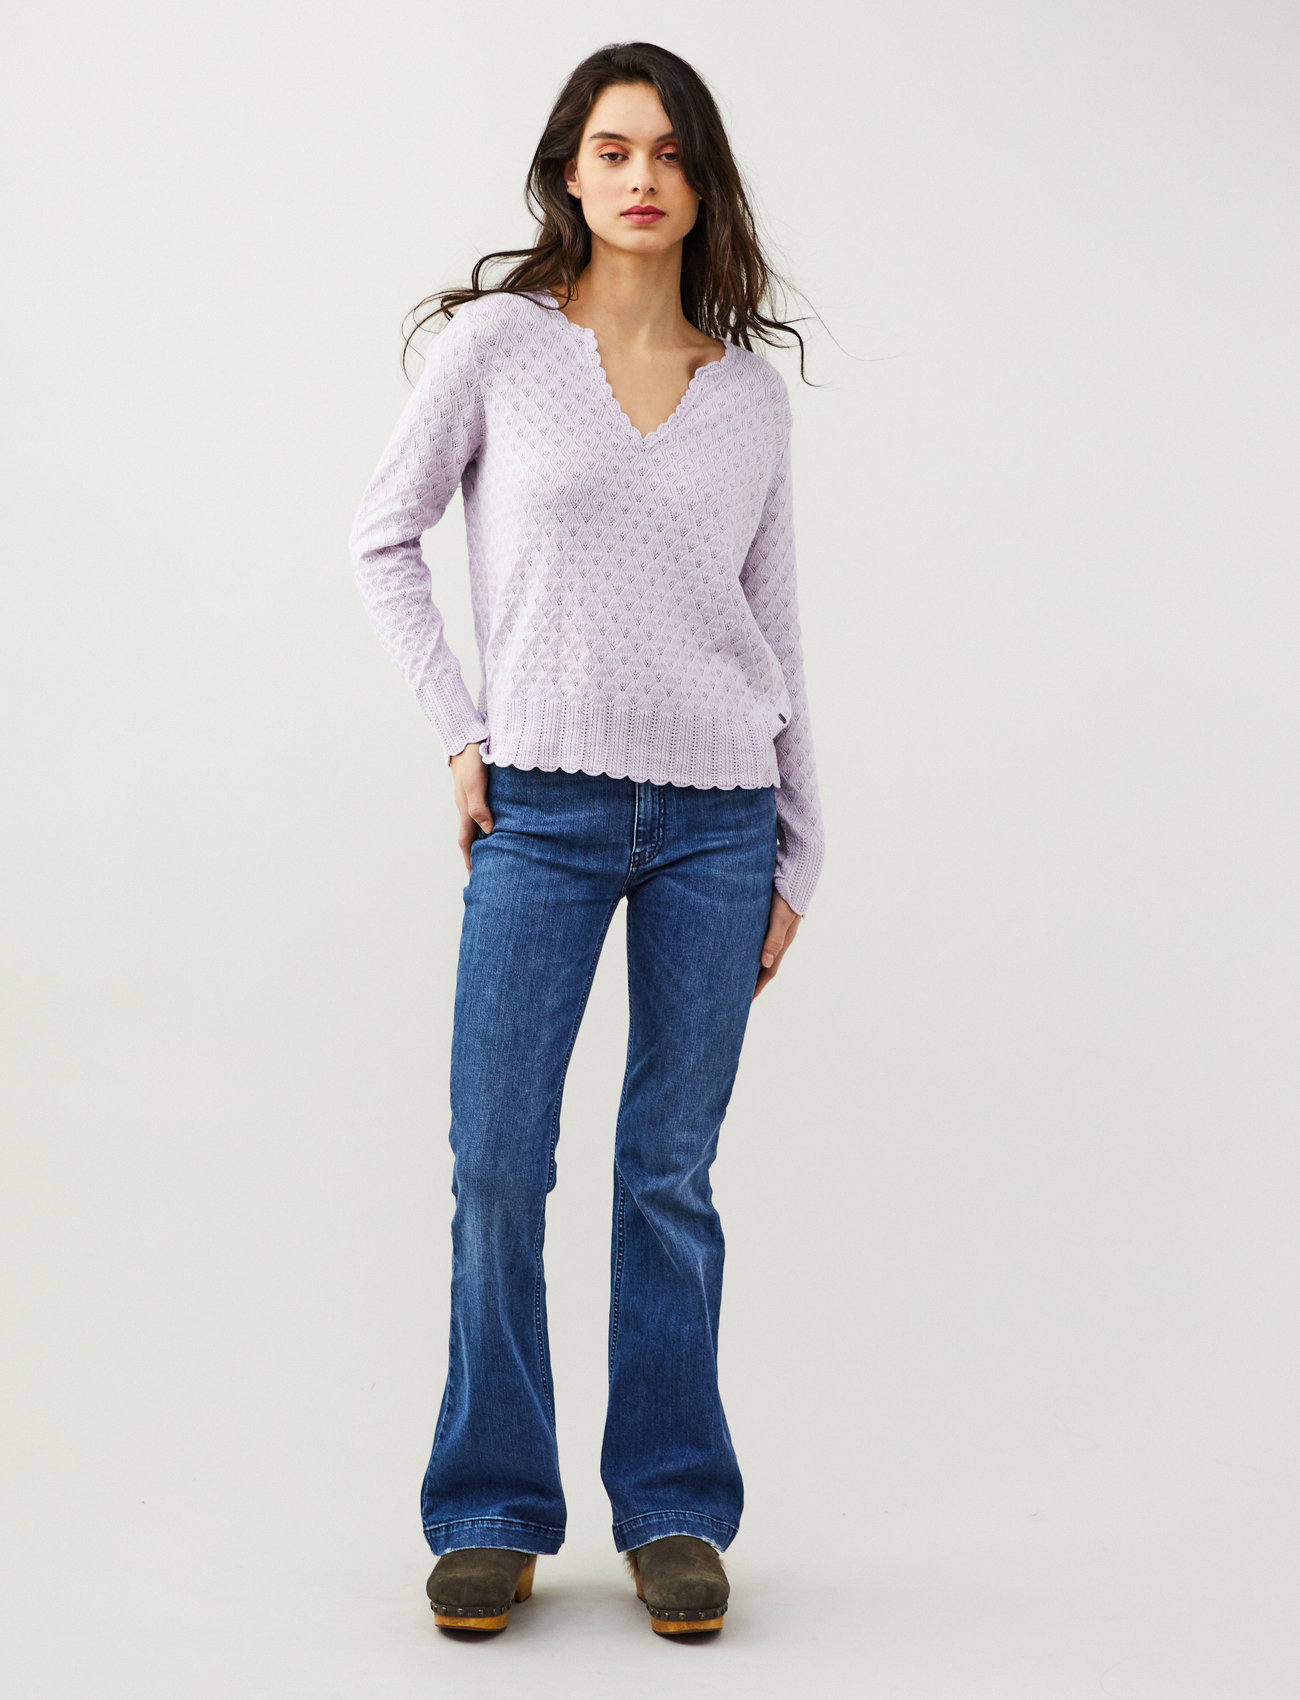 ODD MOLLY - Madeleine Sweater - pulls - soft lilac - 0